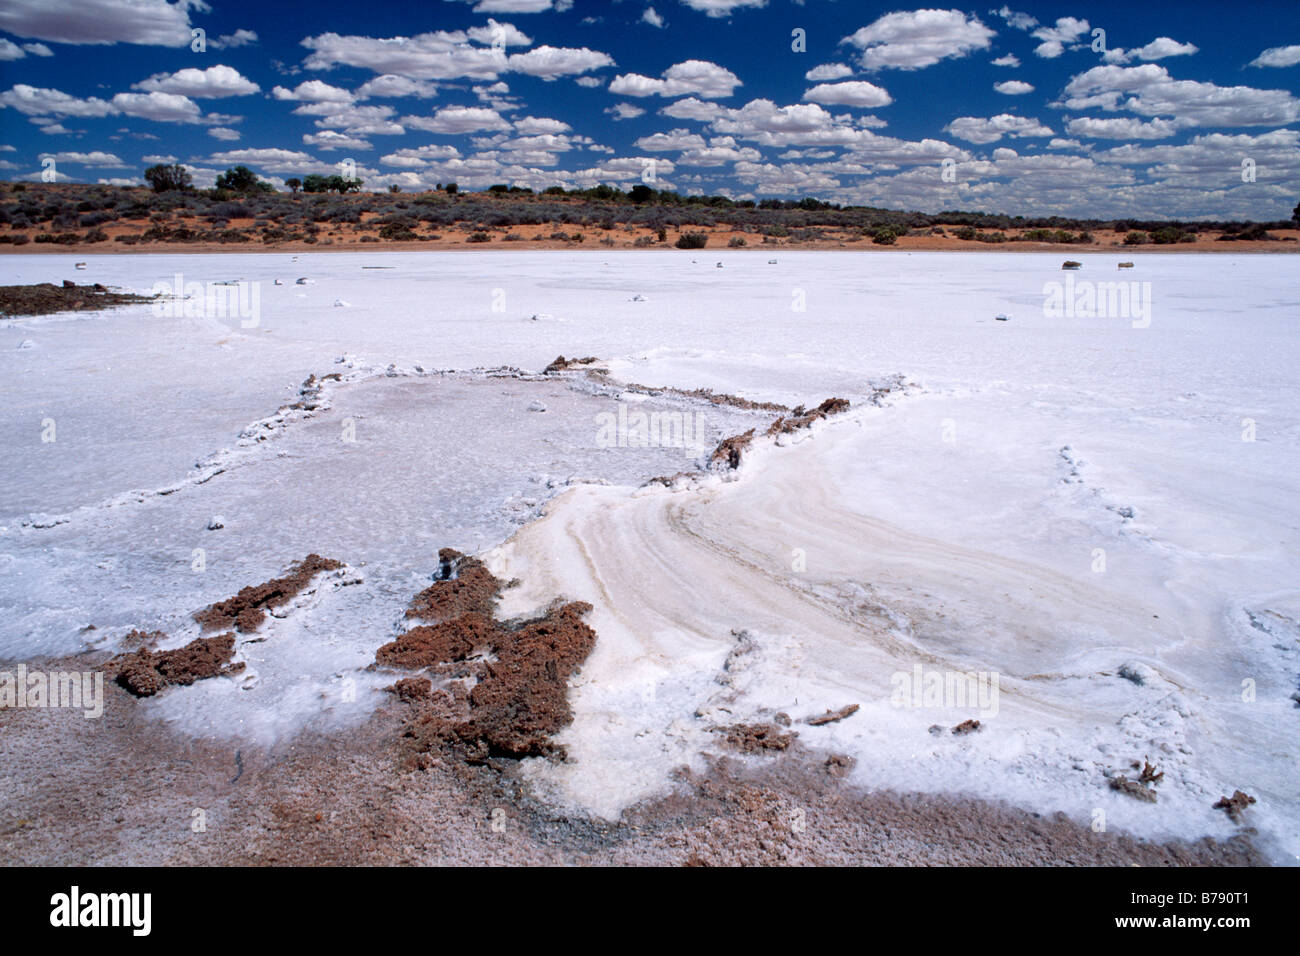 Salt lake in the outback, Southern Australia, Australis Stock Photo